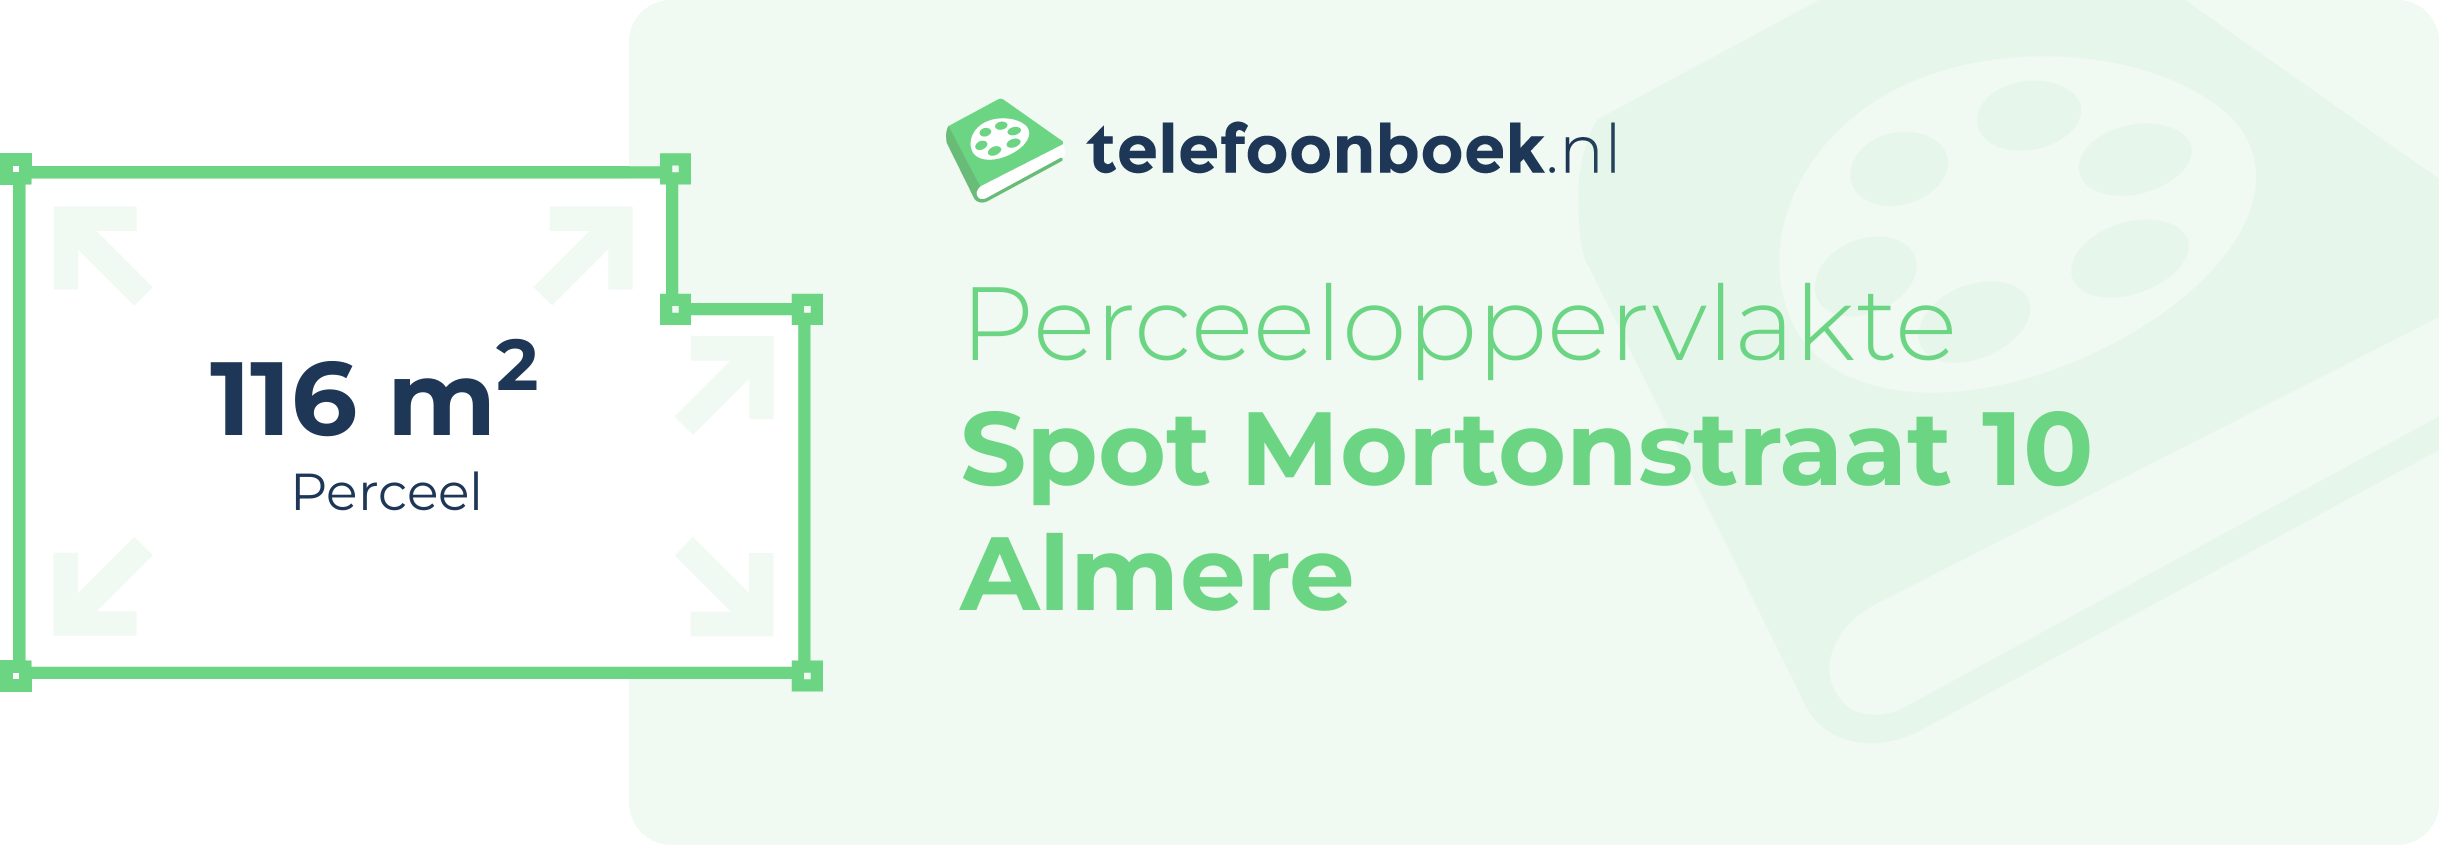 Perceeloppervlakte Spot Mortonstraat 10 Almere